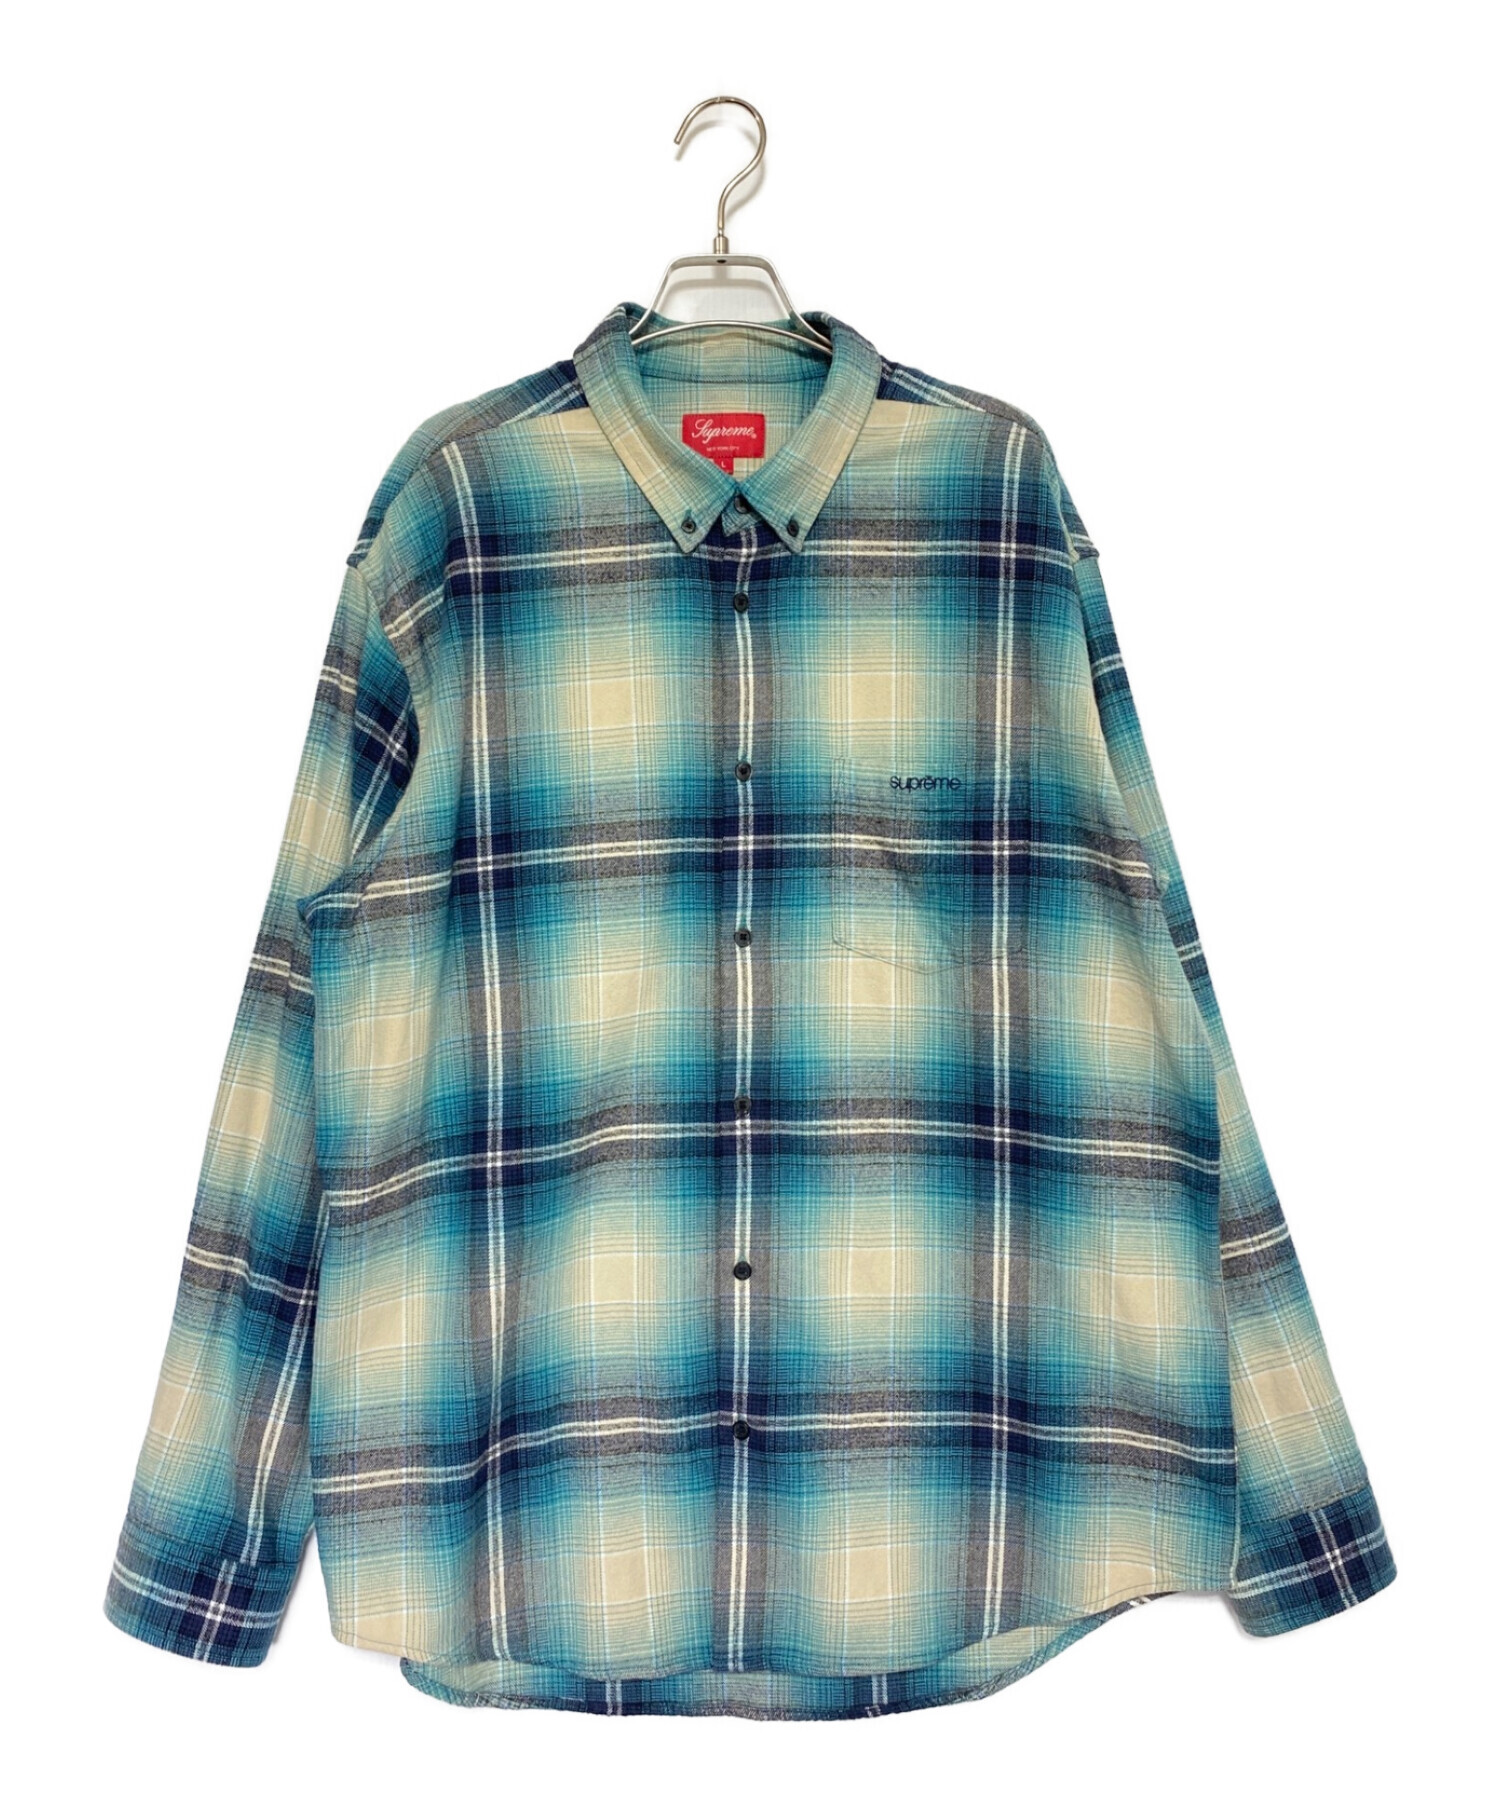 supreme Plaid Flannel Shirt Blue Lサイズ